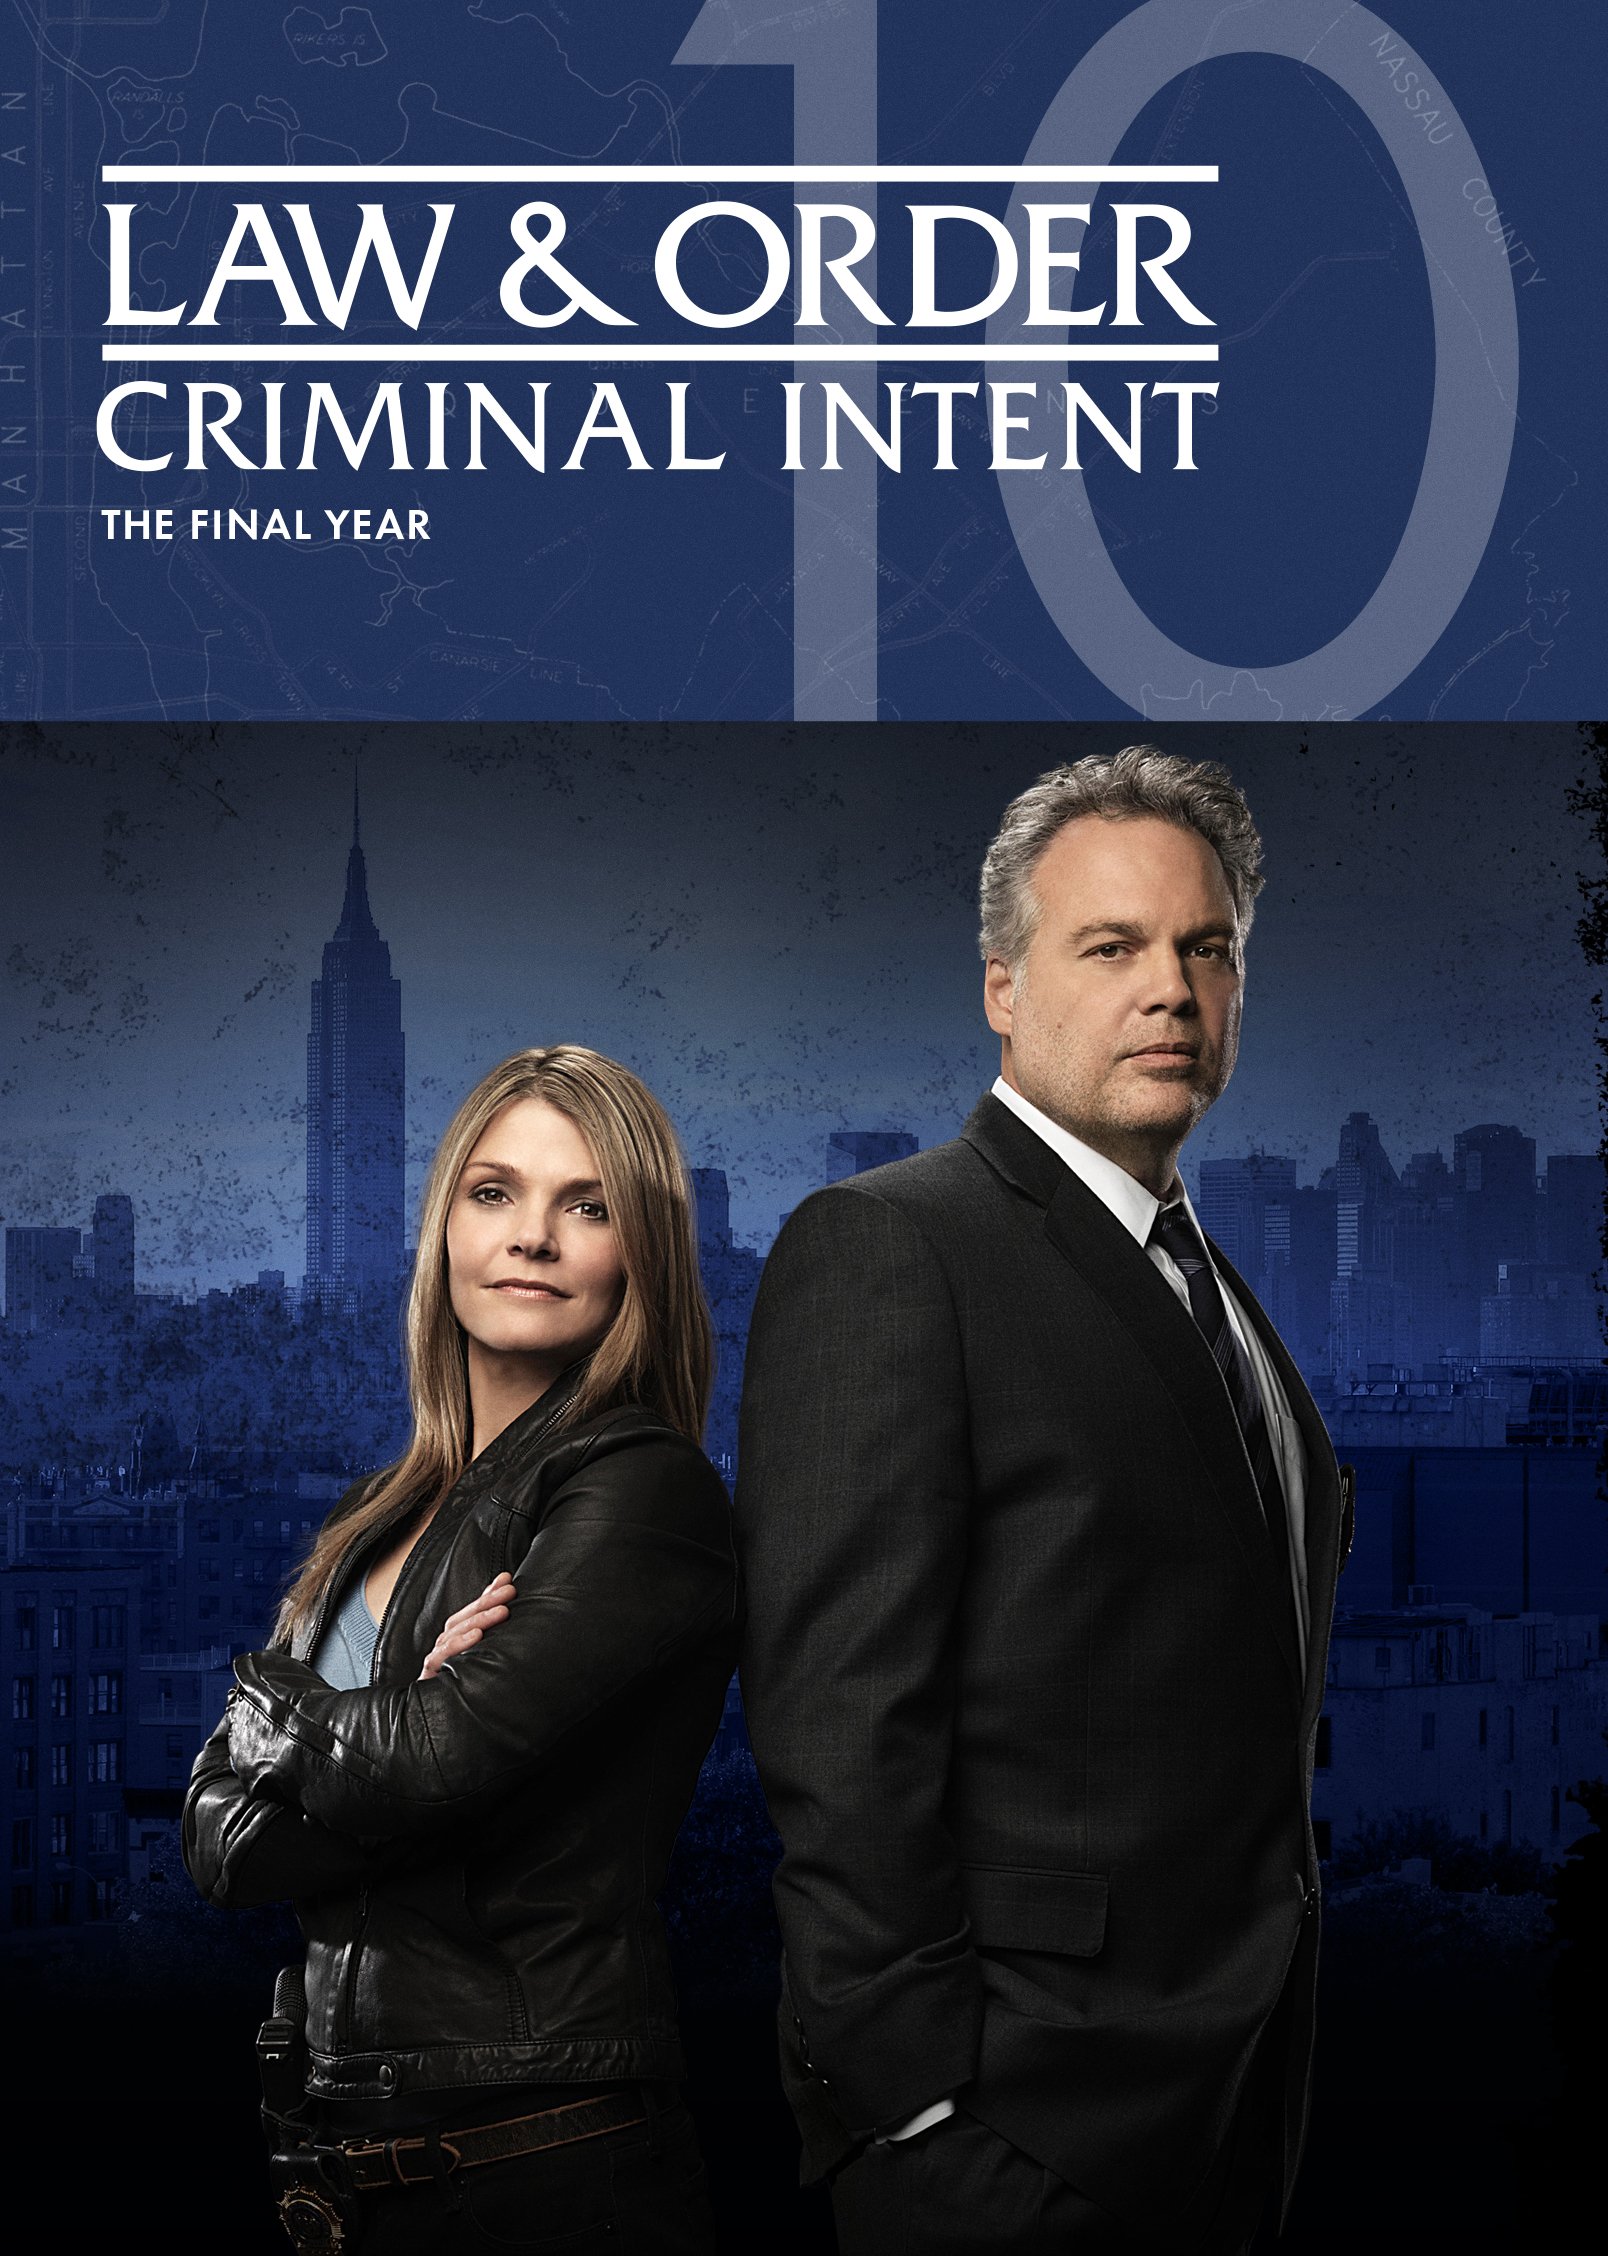 Law & Order: Criminal Intent DVD Release Date